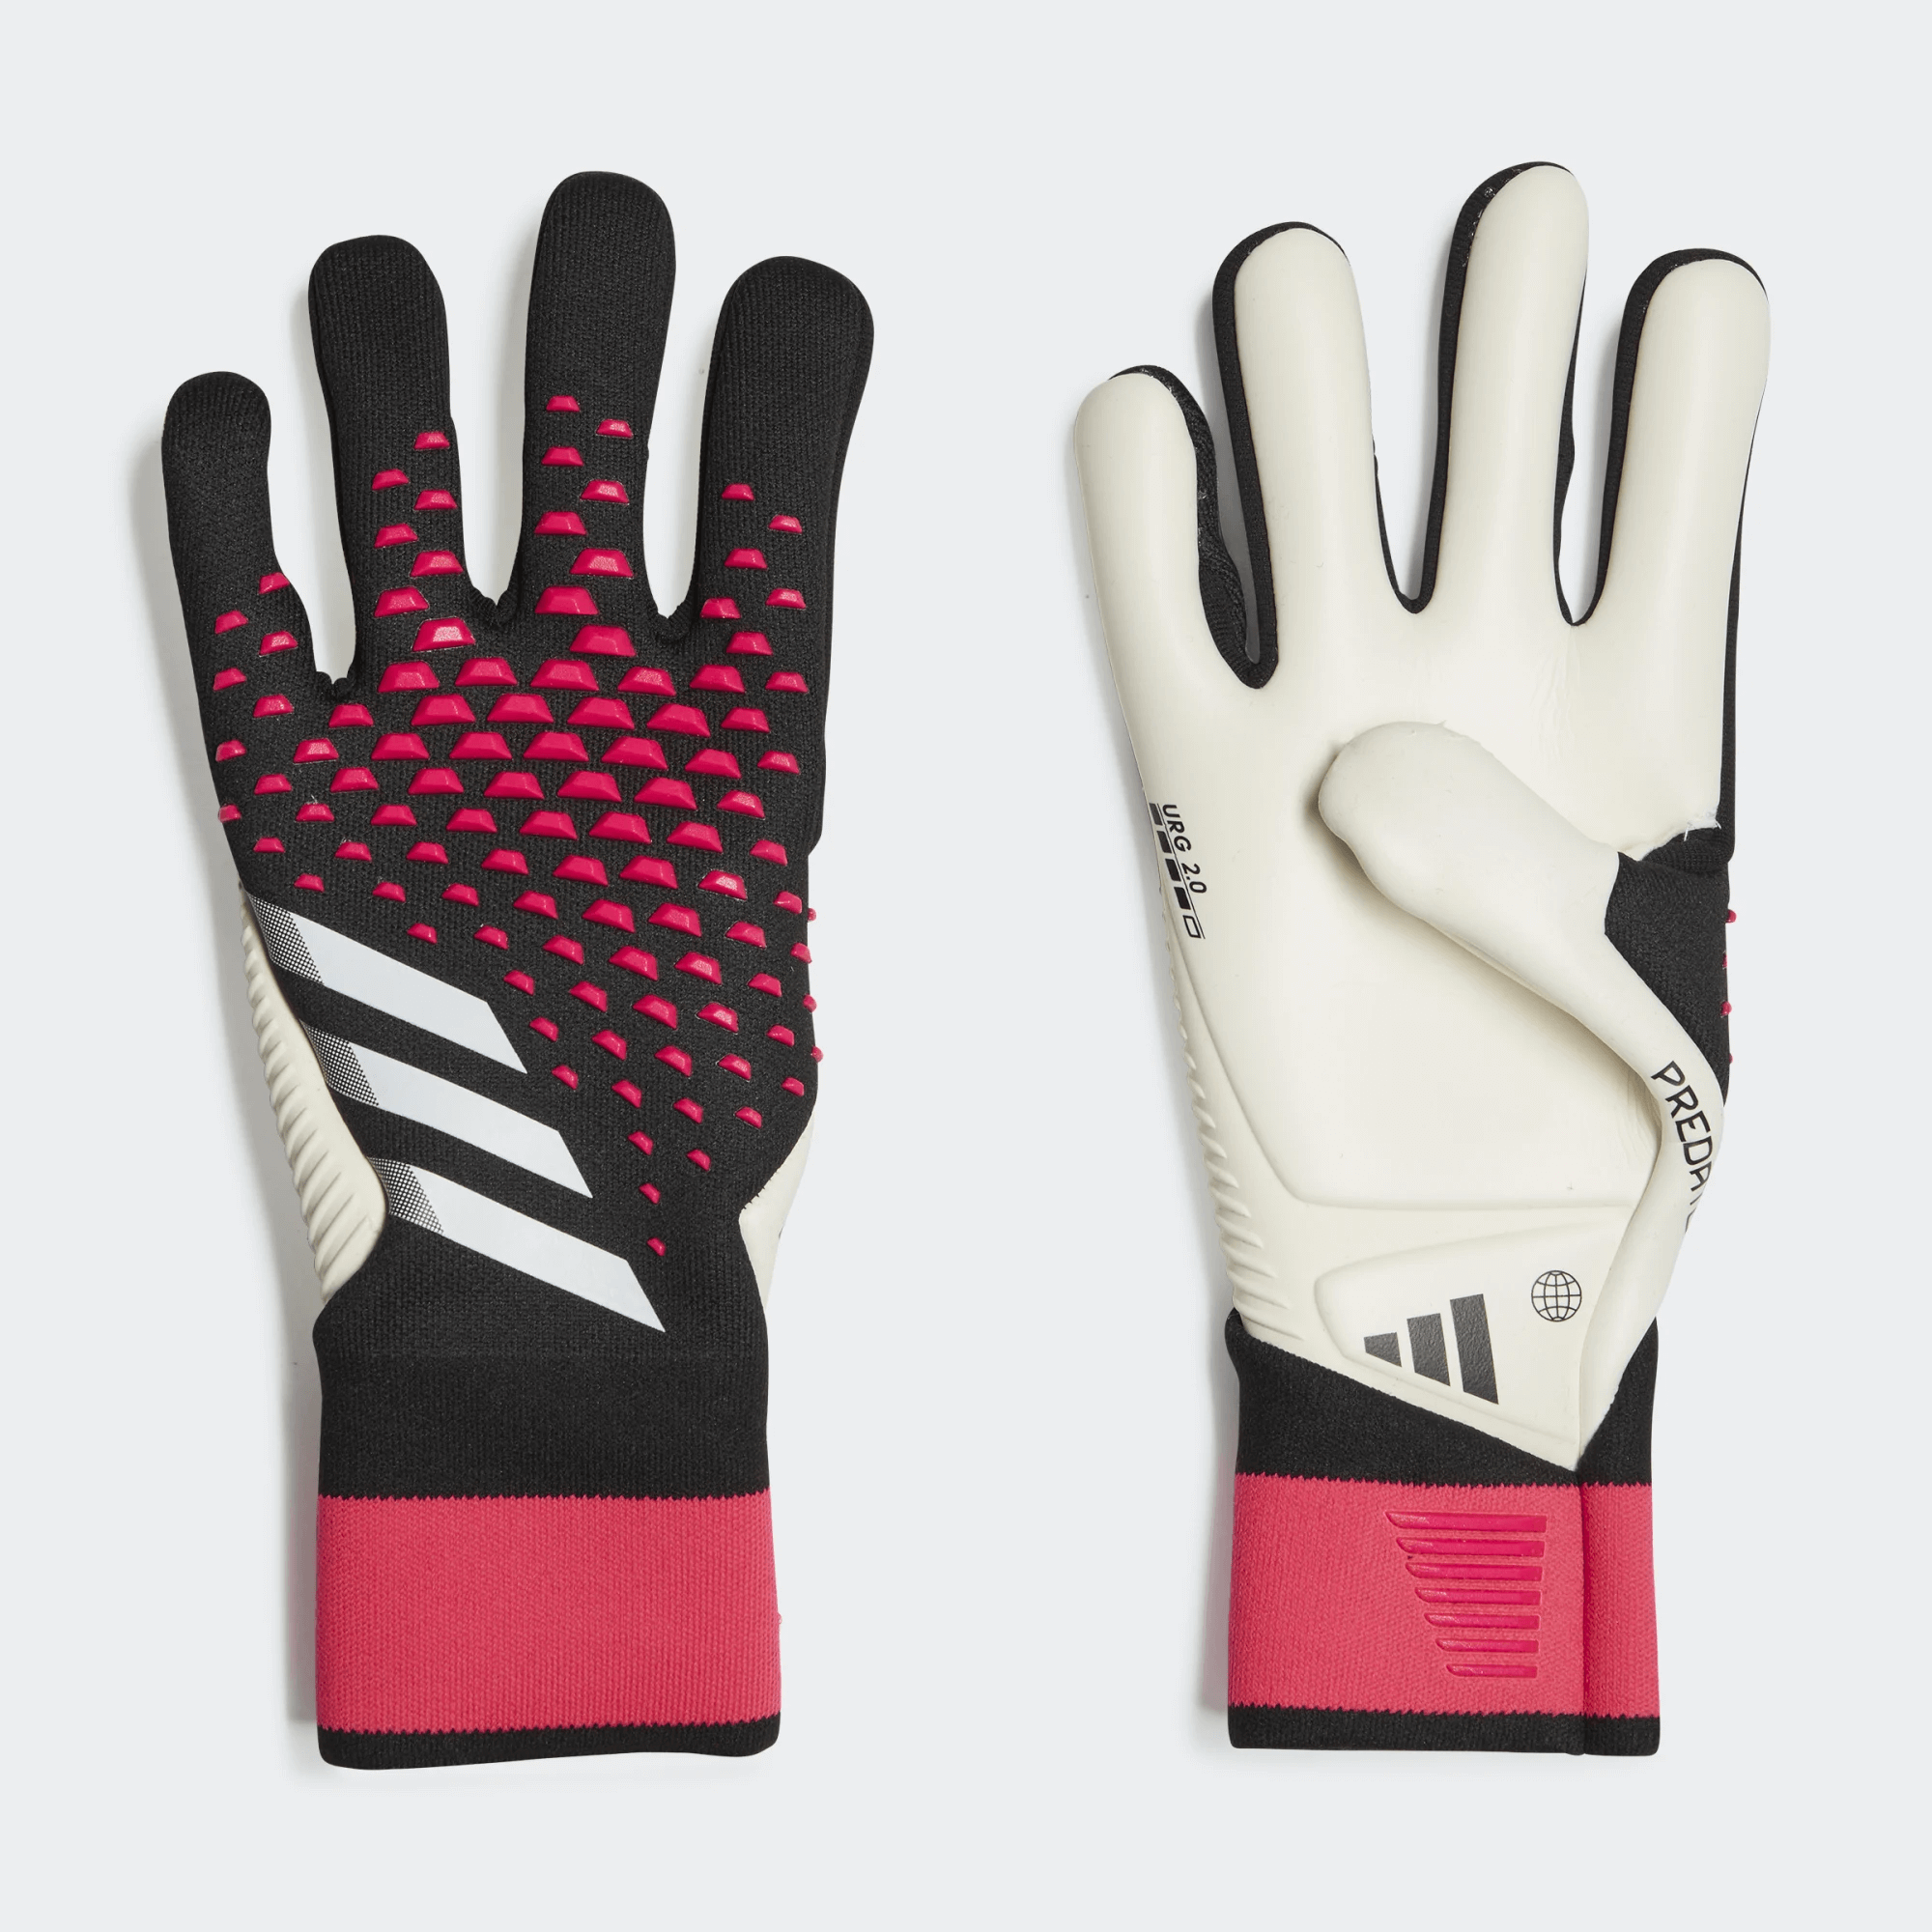 Adidas Predator Pro Pink Goalkeeper Gloves Preview 